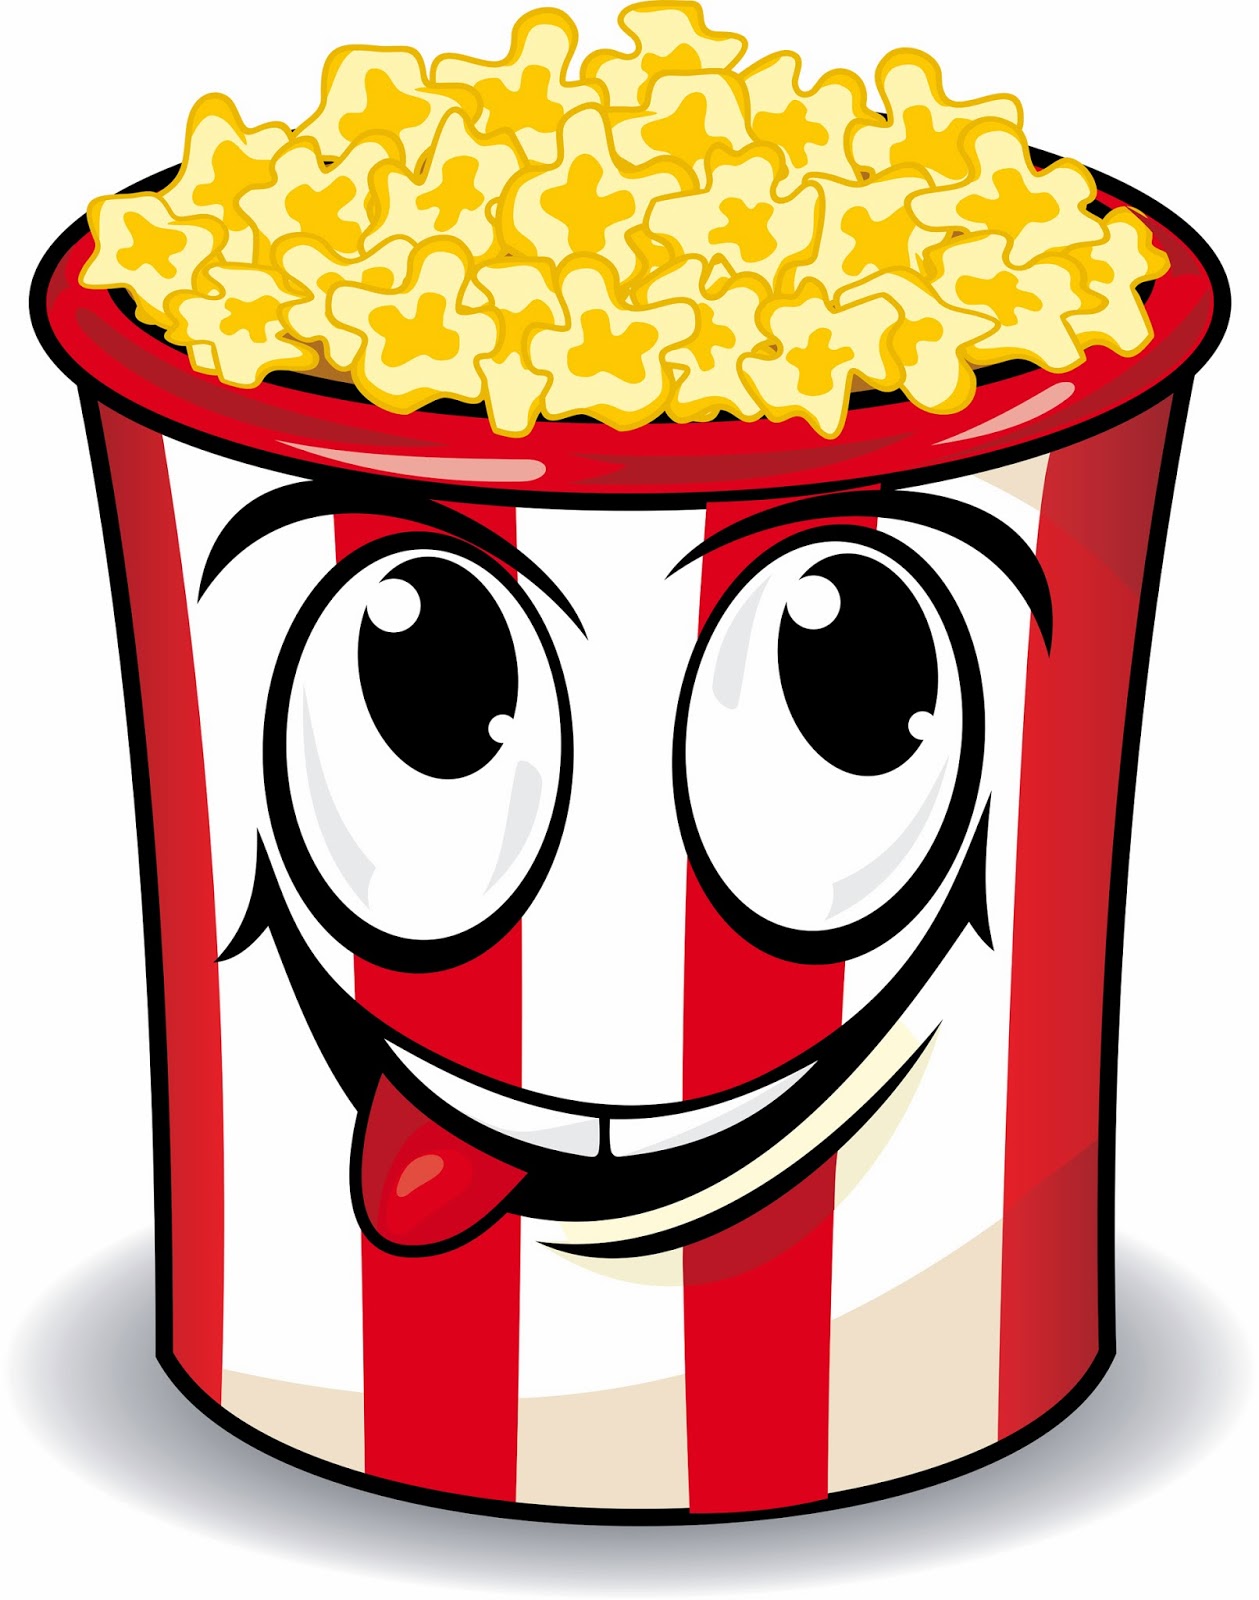 Cartoon popcorn clip art popcorn graphics clipart popcorn icon 2 ...